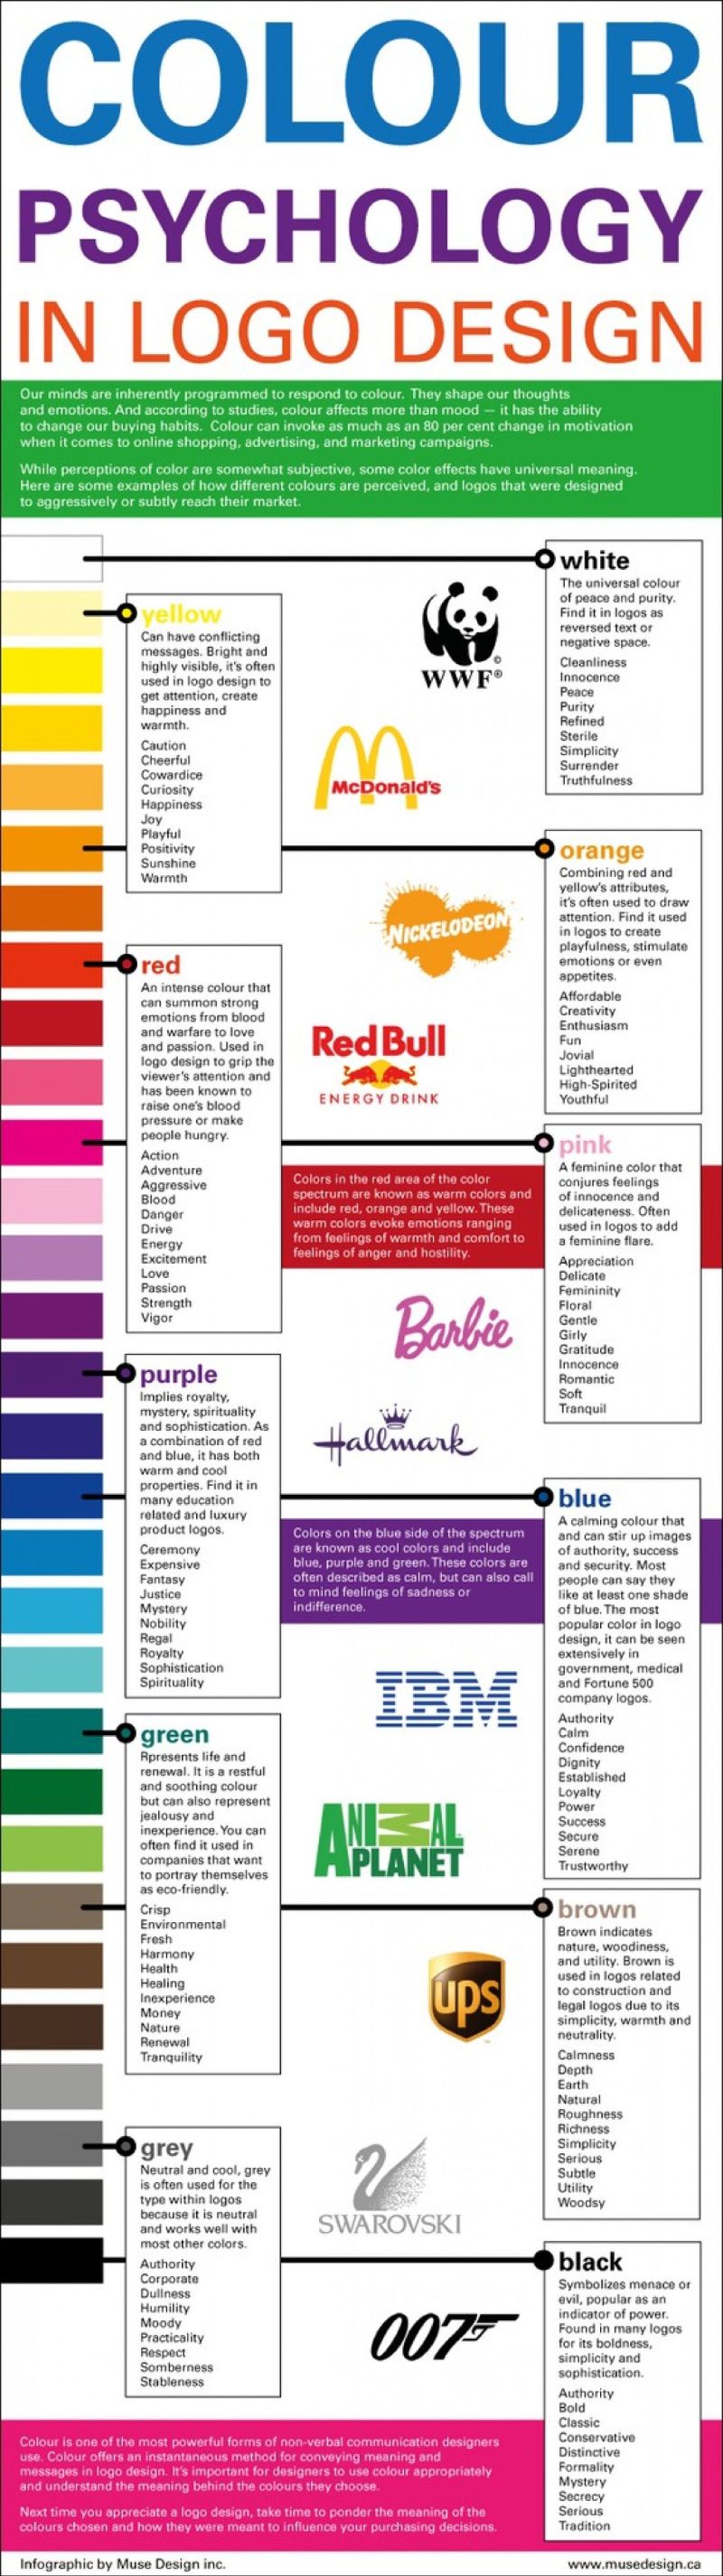 colour psychology infographic